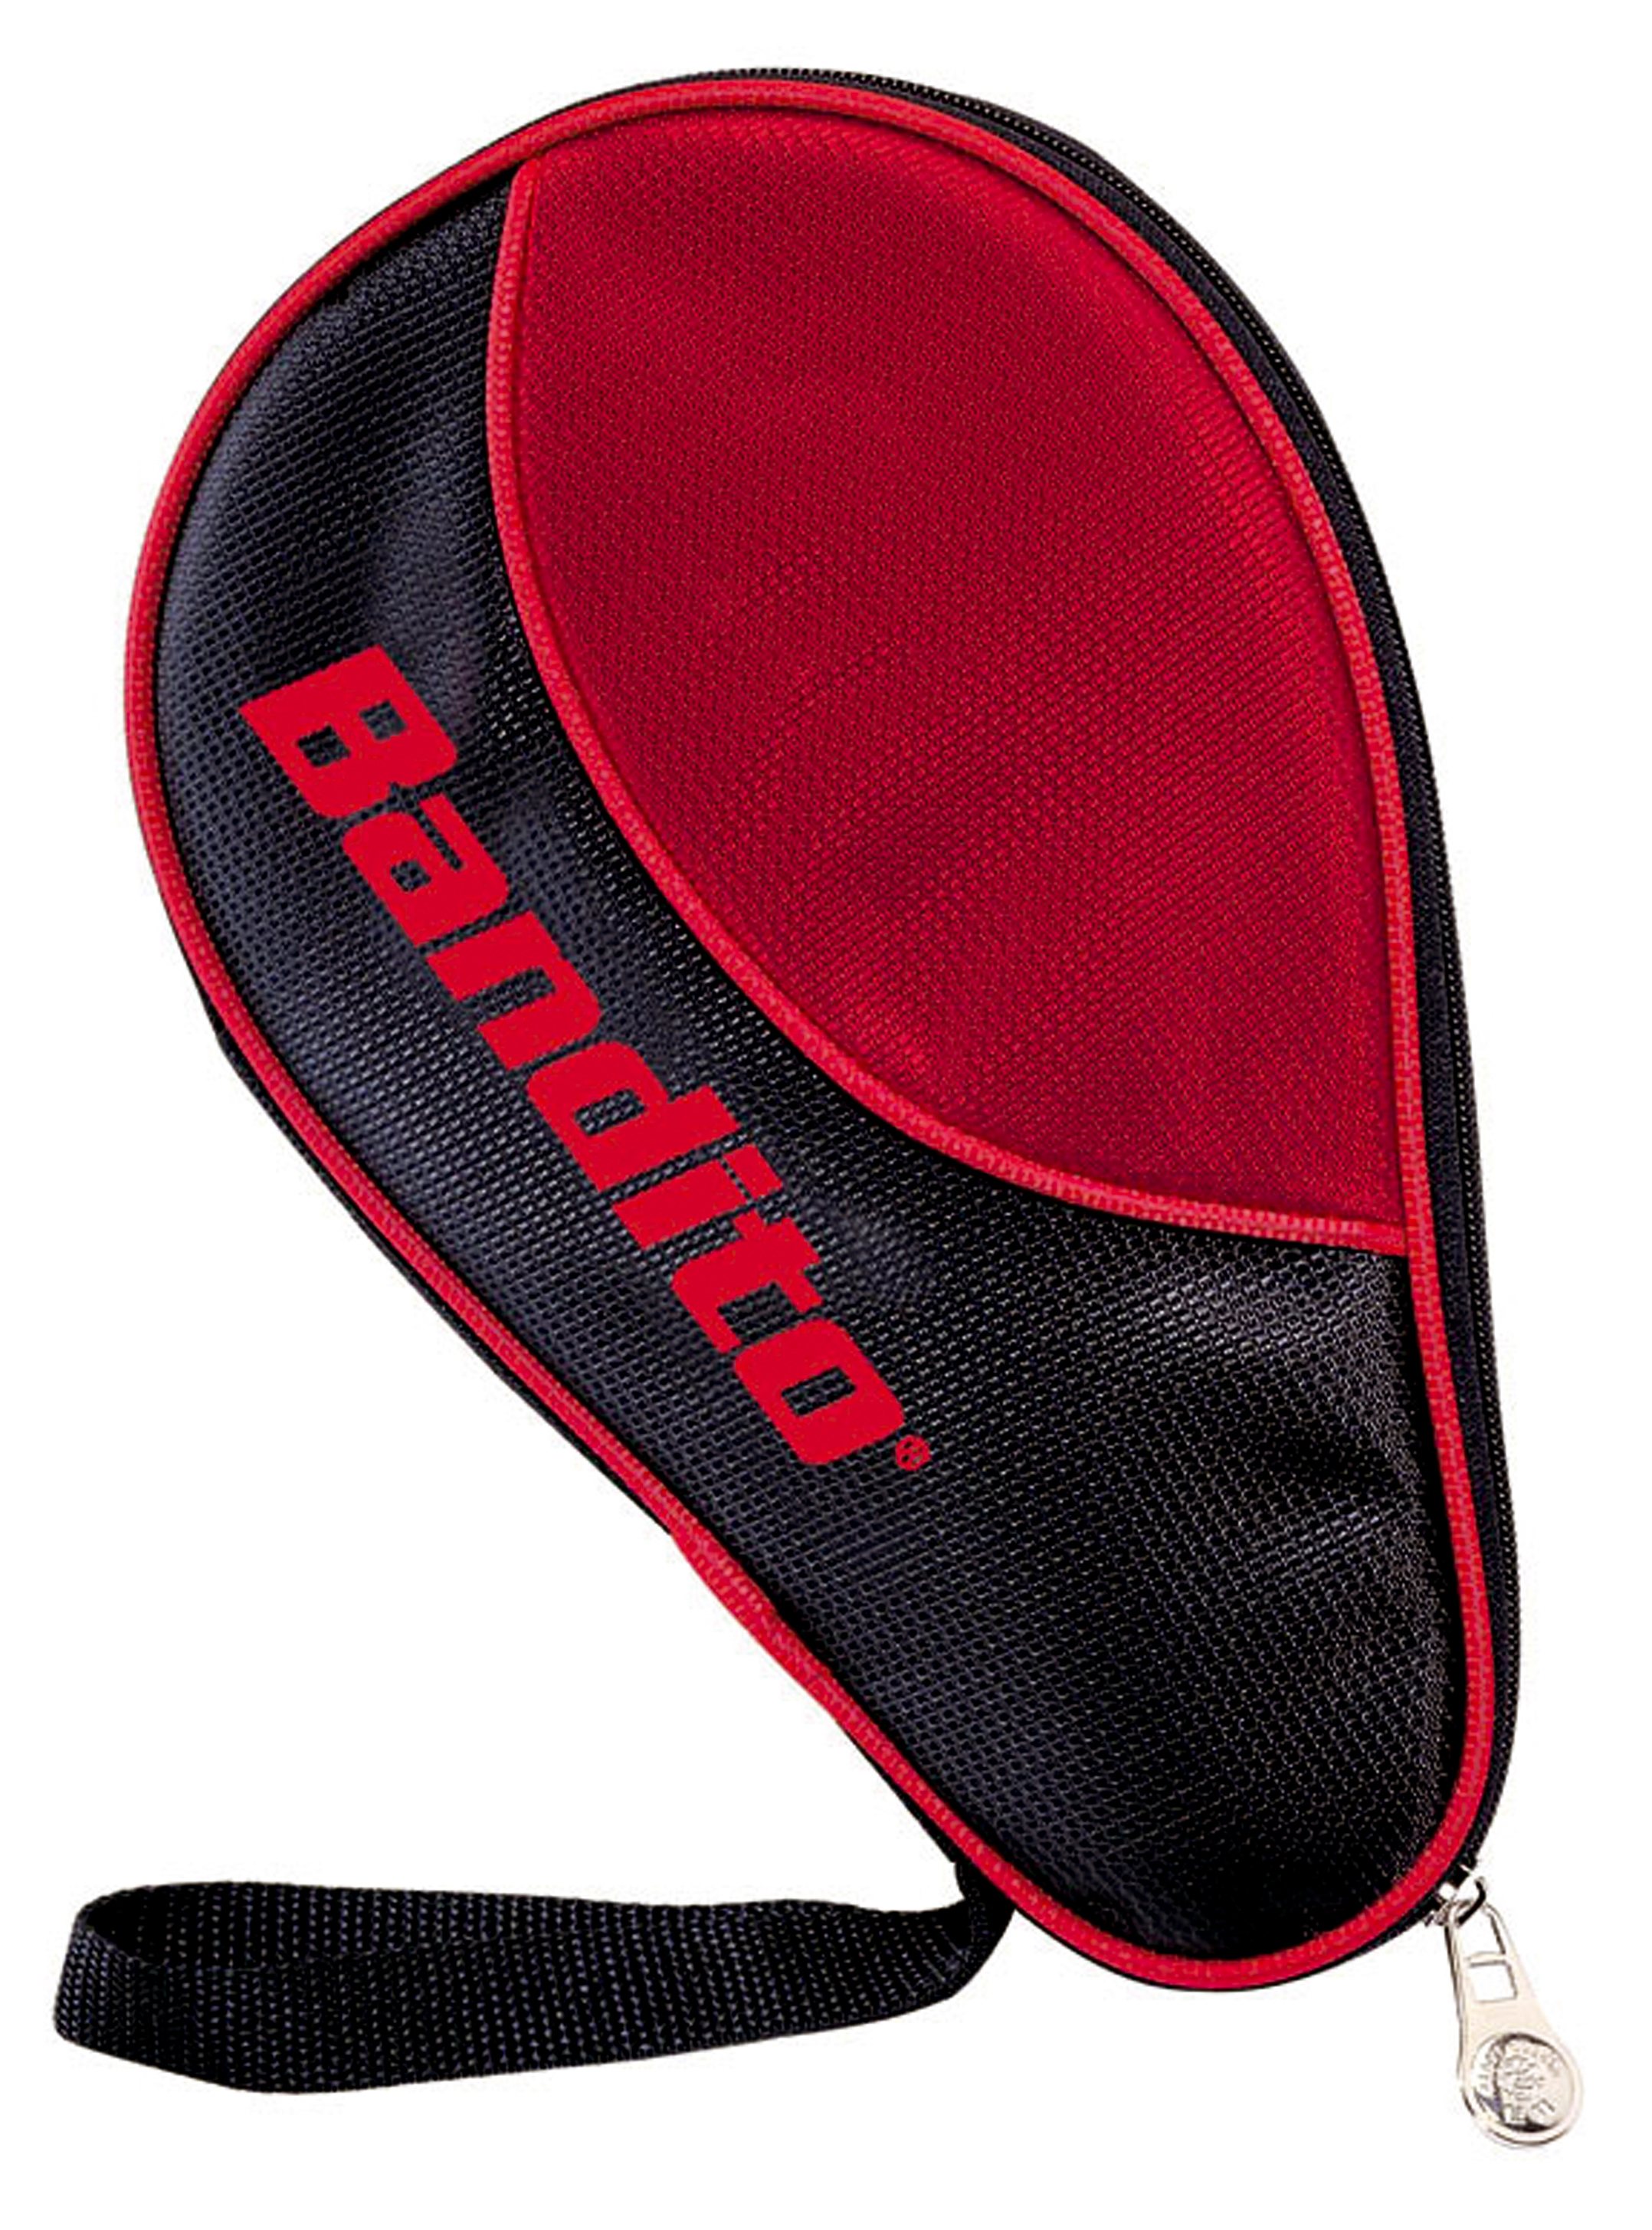 Table tennis bat bag for 1 bat and 4 balls